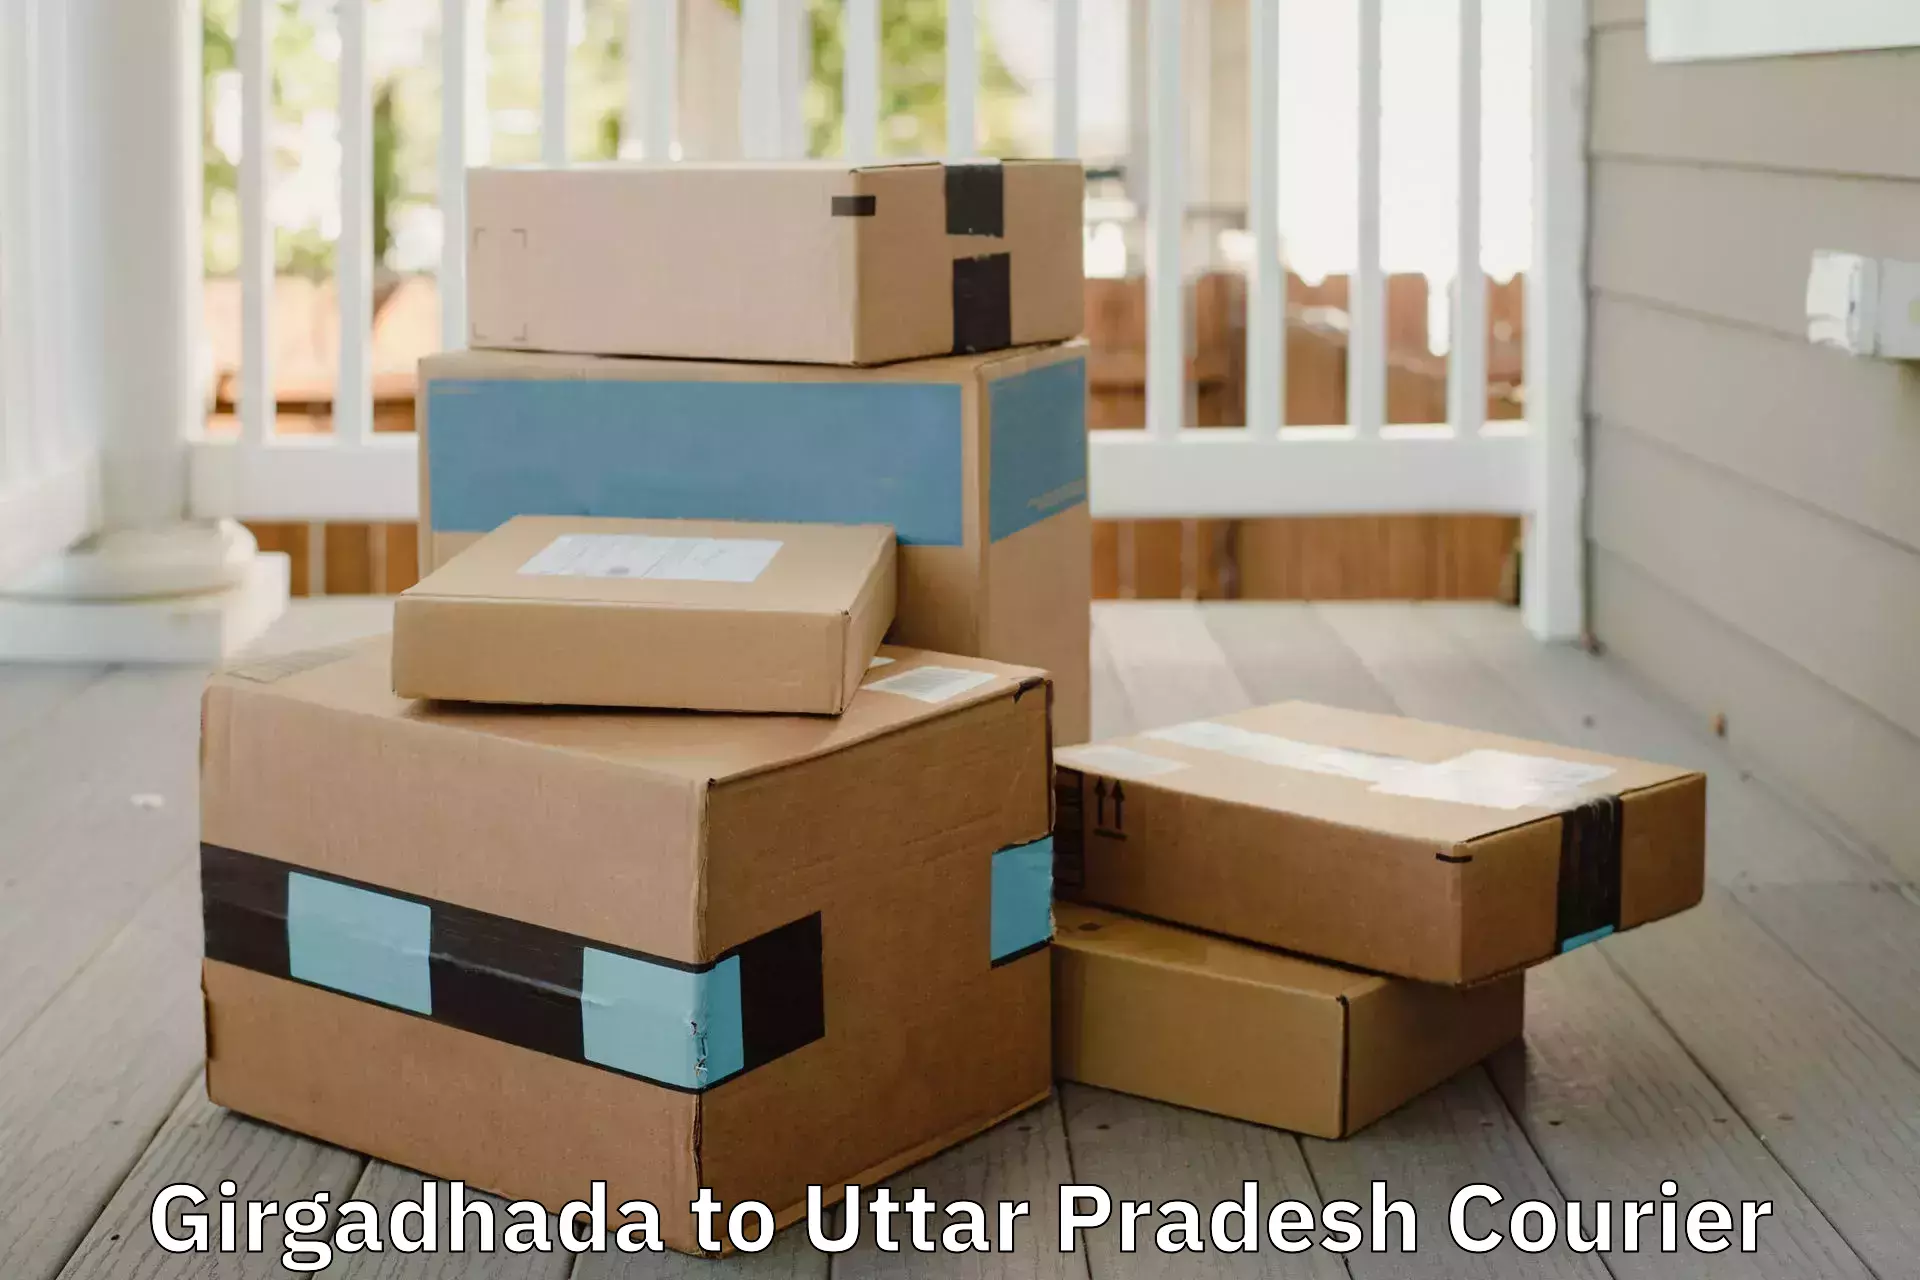 Professional household moving Girgadhada to Gorakhpur